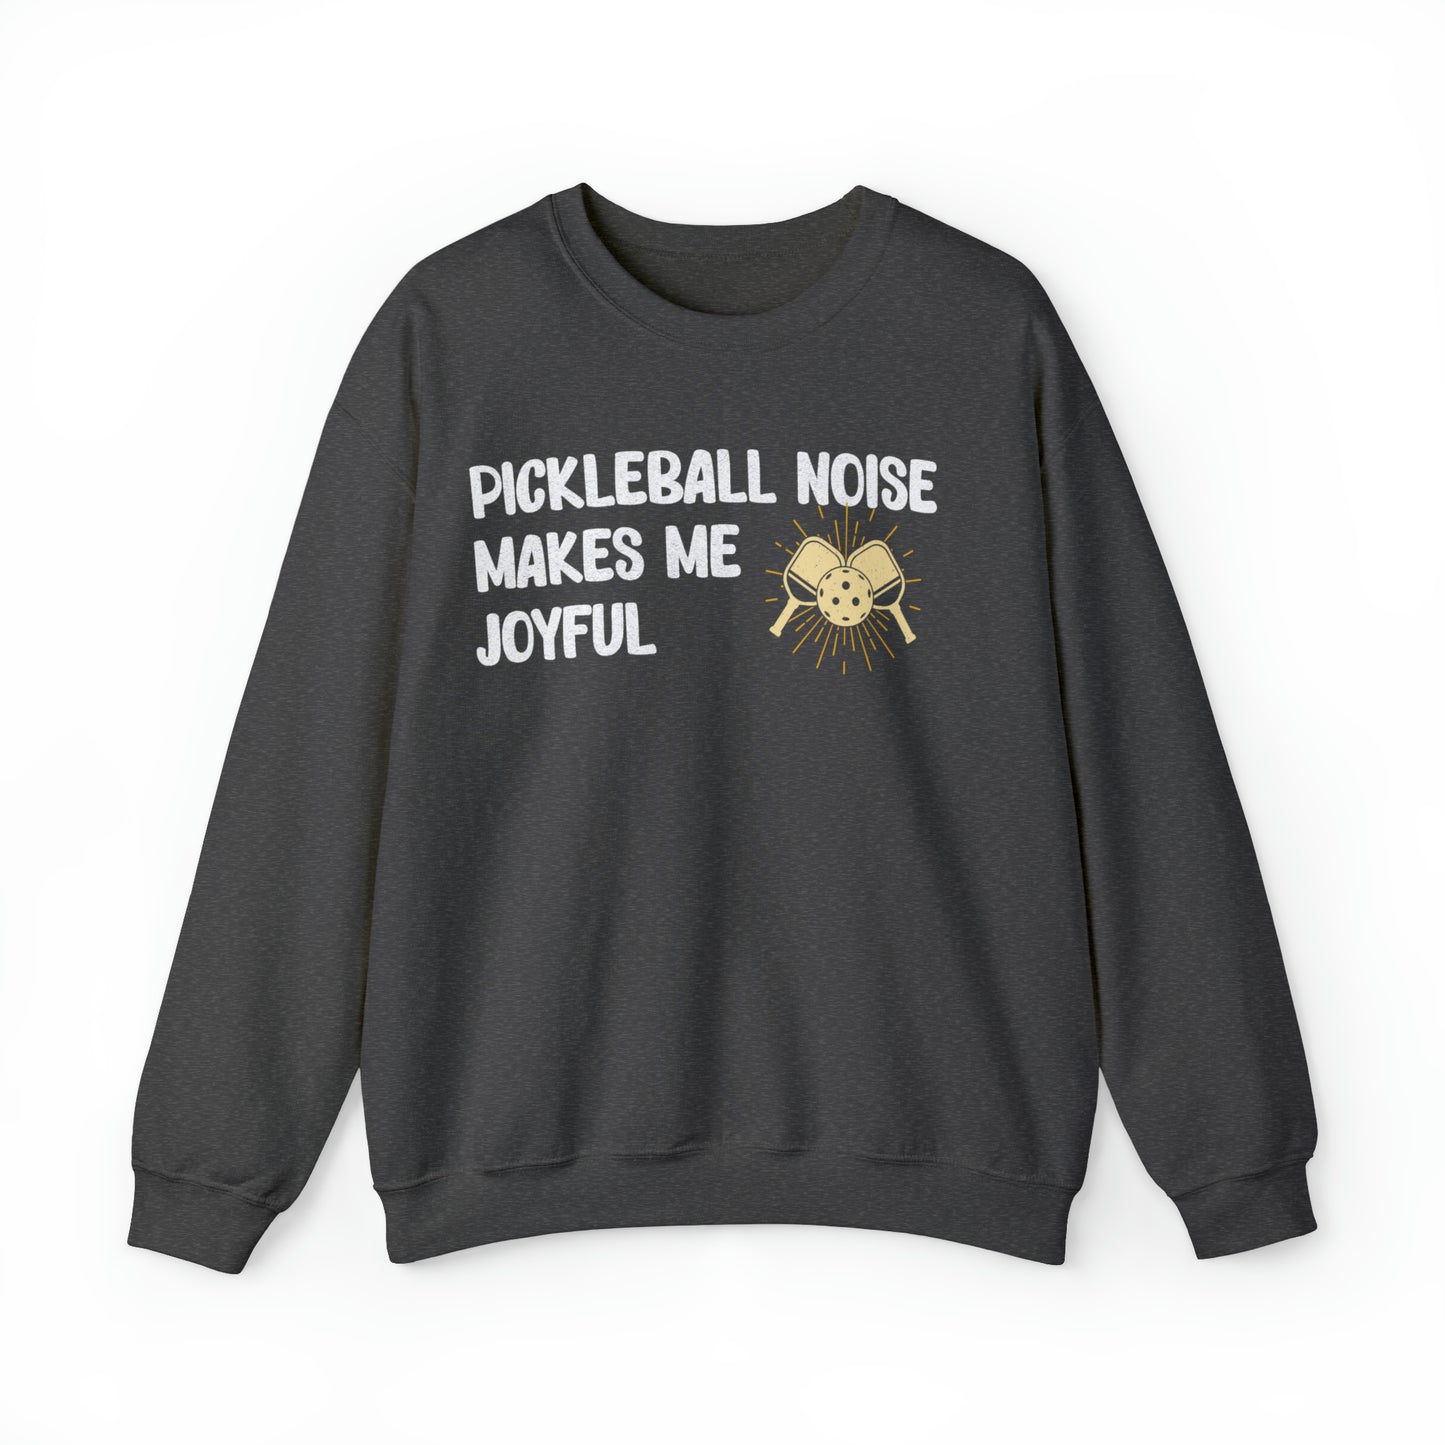 Pickleball Noise Makes Me Joyful, Pickleball Noise Sweatshirt